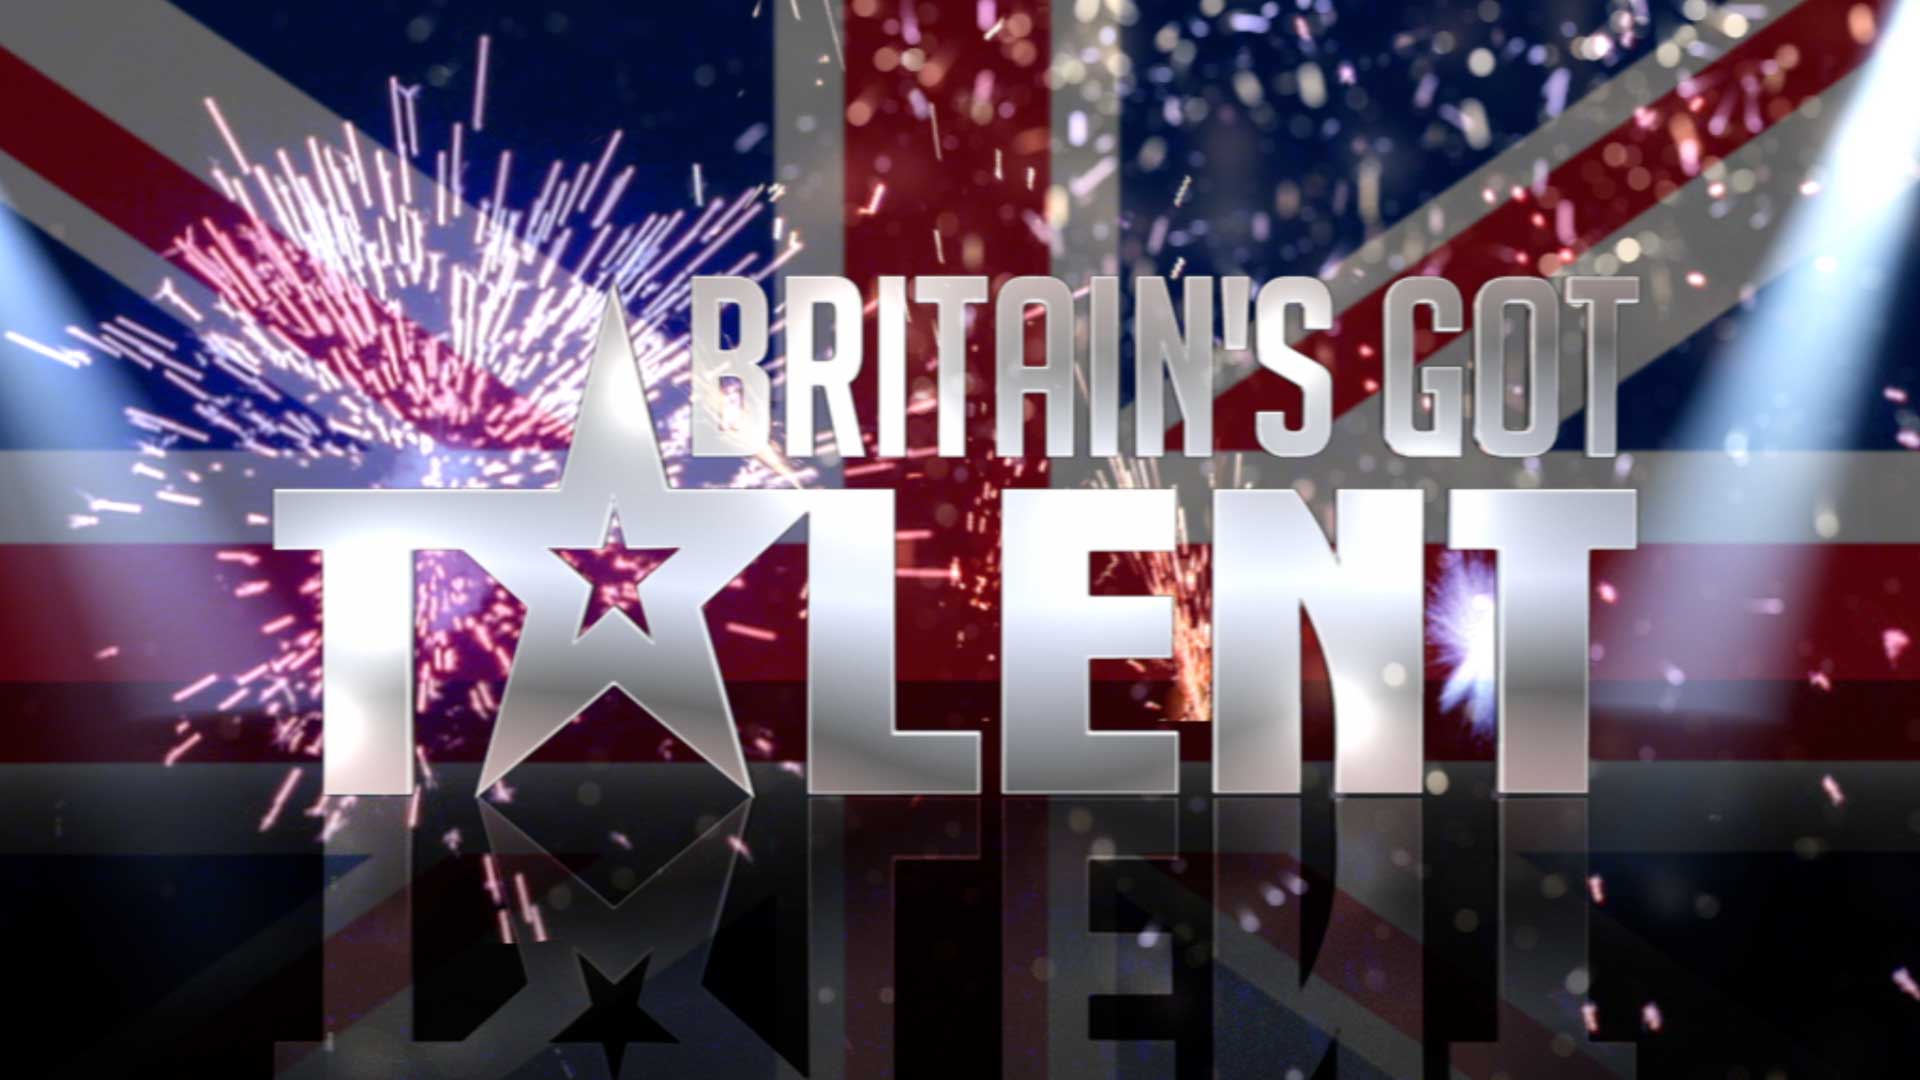 Britains Got Talent | GeeFX Studios | Motion Graphics - Visual.